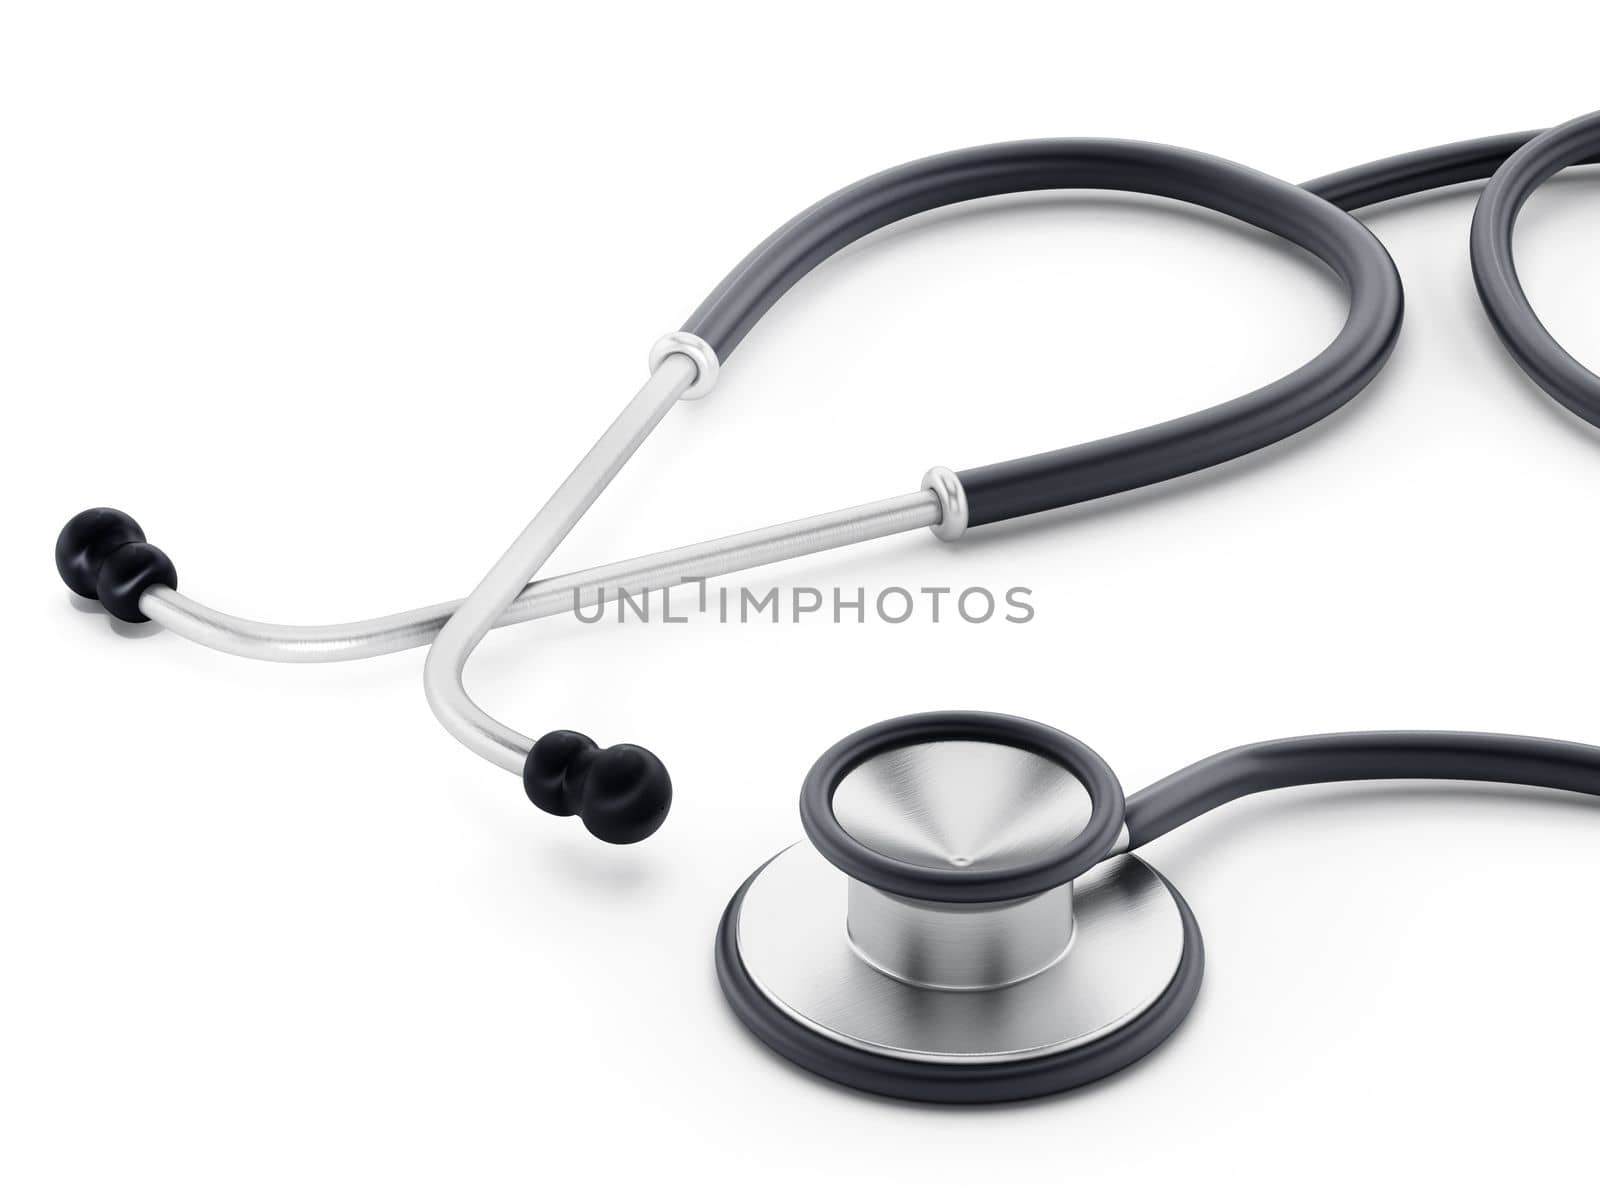 Stethoscope standing on white surface. 3D illustration.